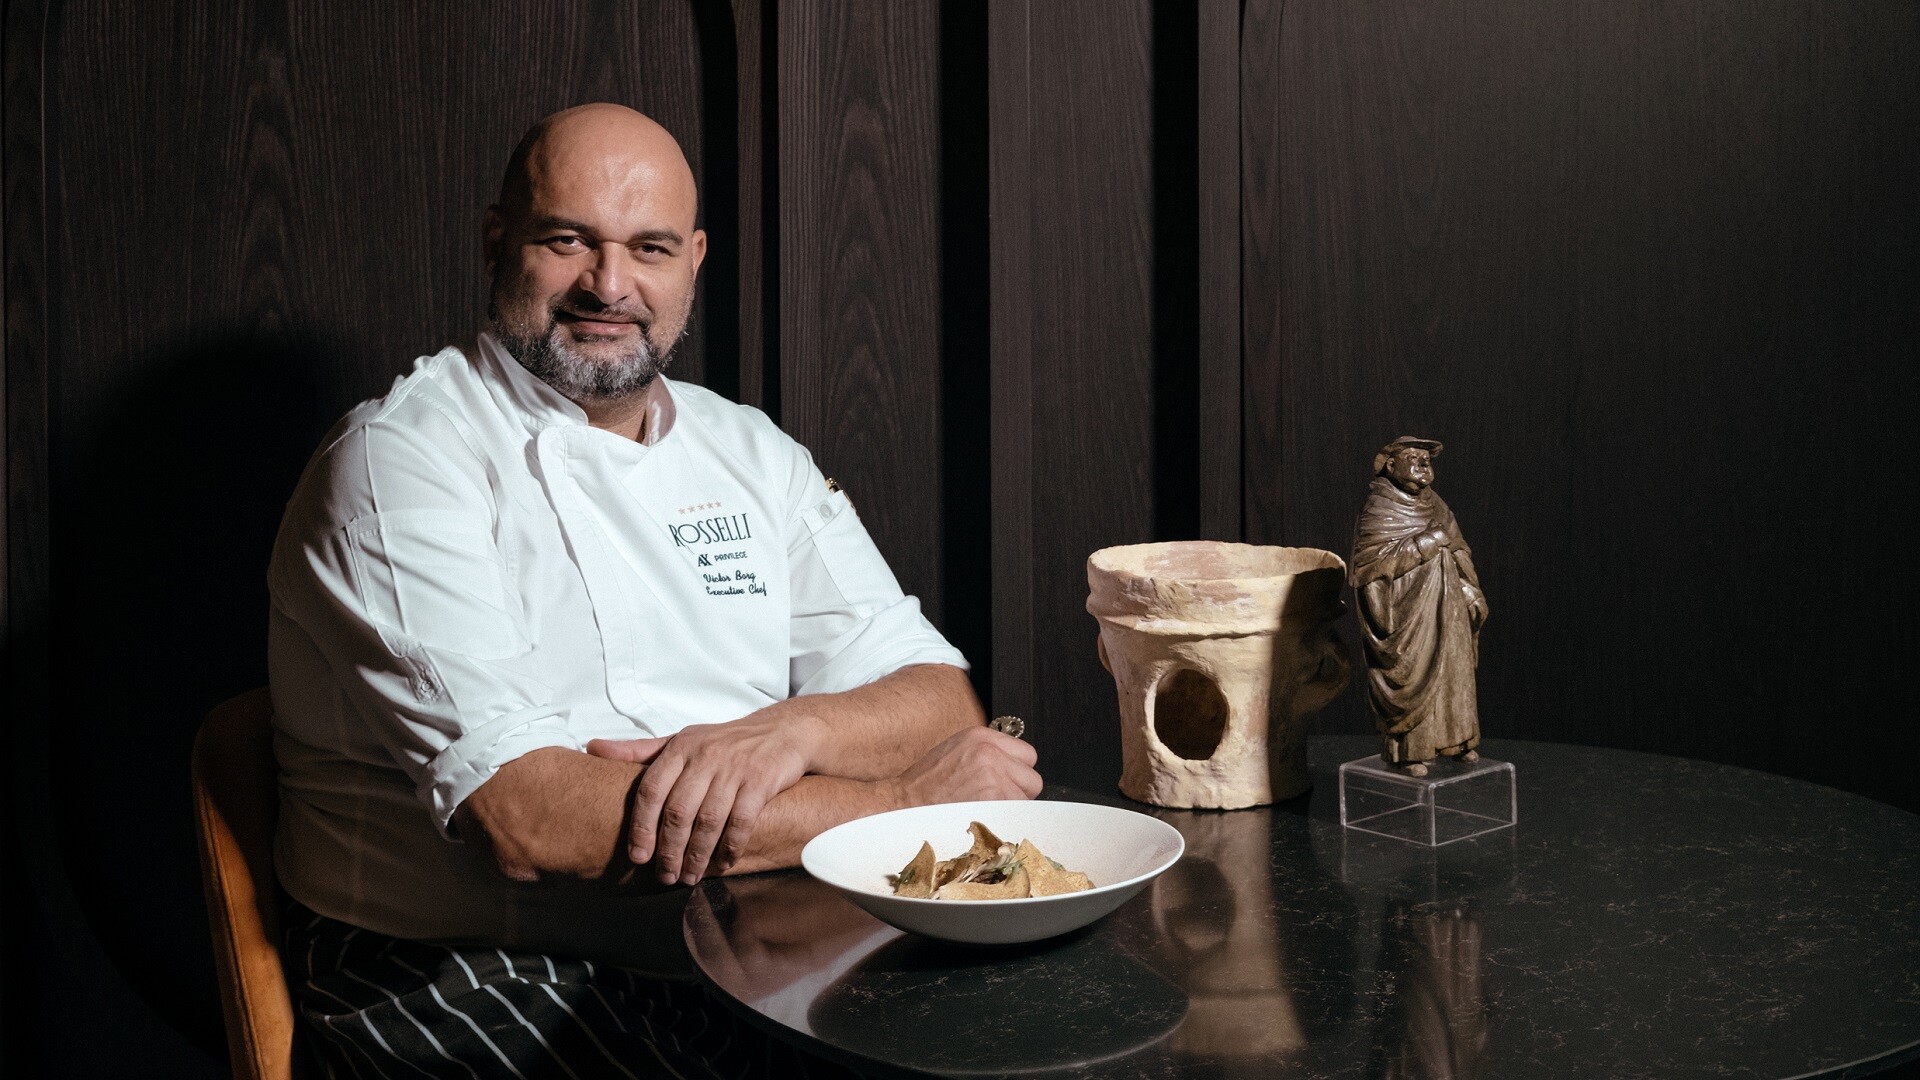 Rosselli restaurant collaborates on Taste History Meets the Stars - Chef Victor Borg